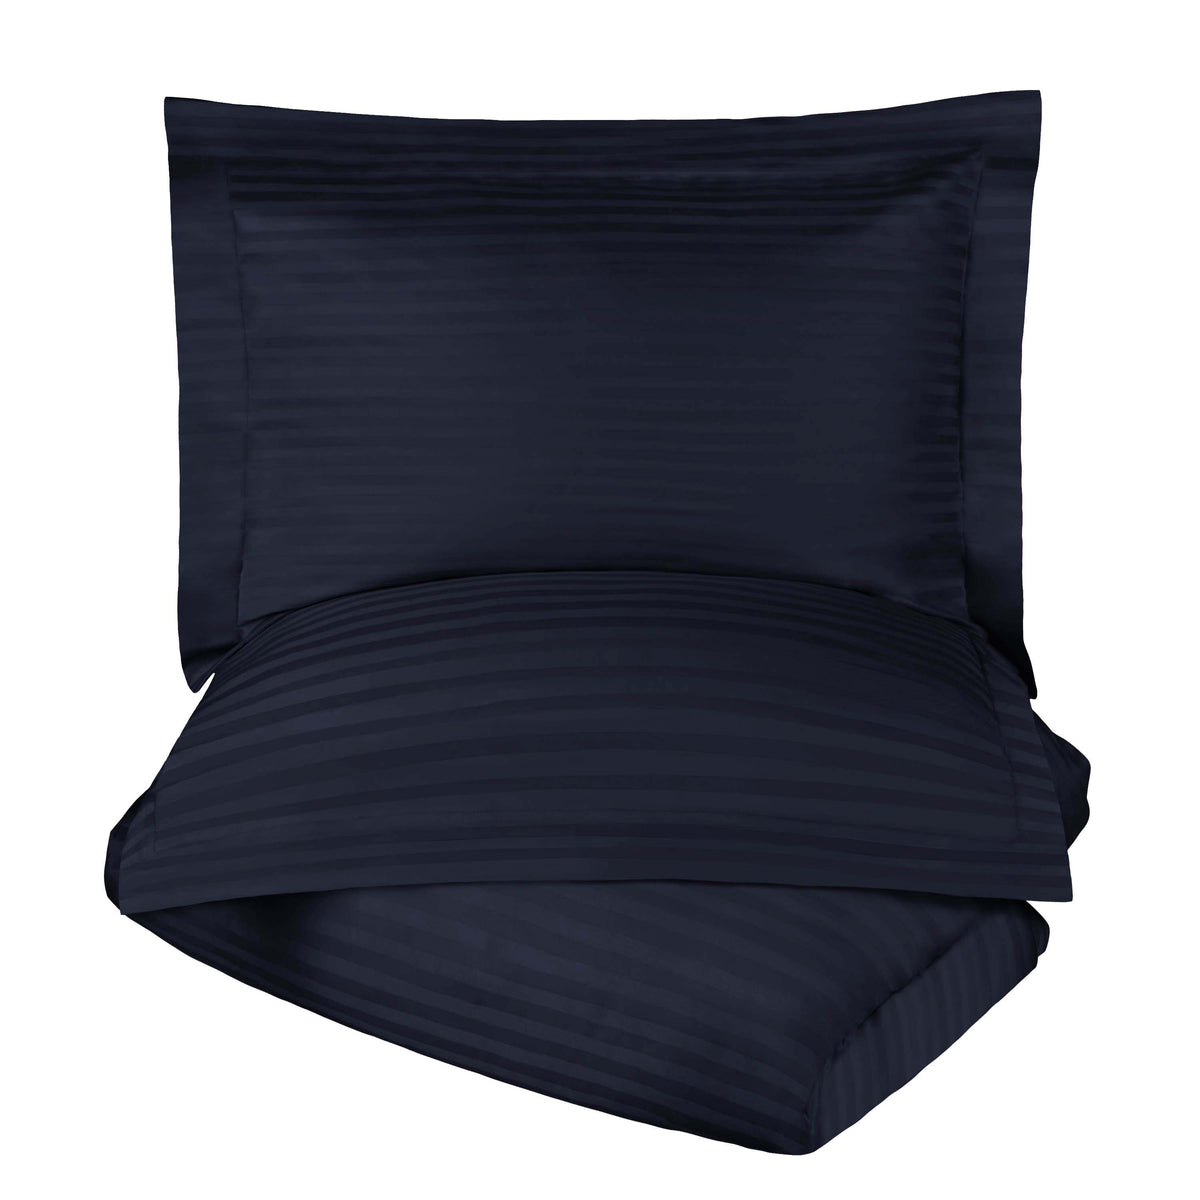 Superior Egyptian Cotton 300 Thread Count Duvet Cover Set - Navy Blue